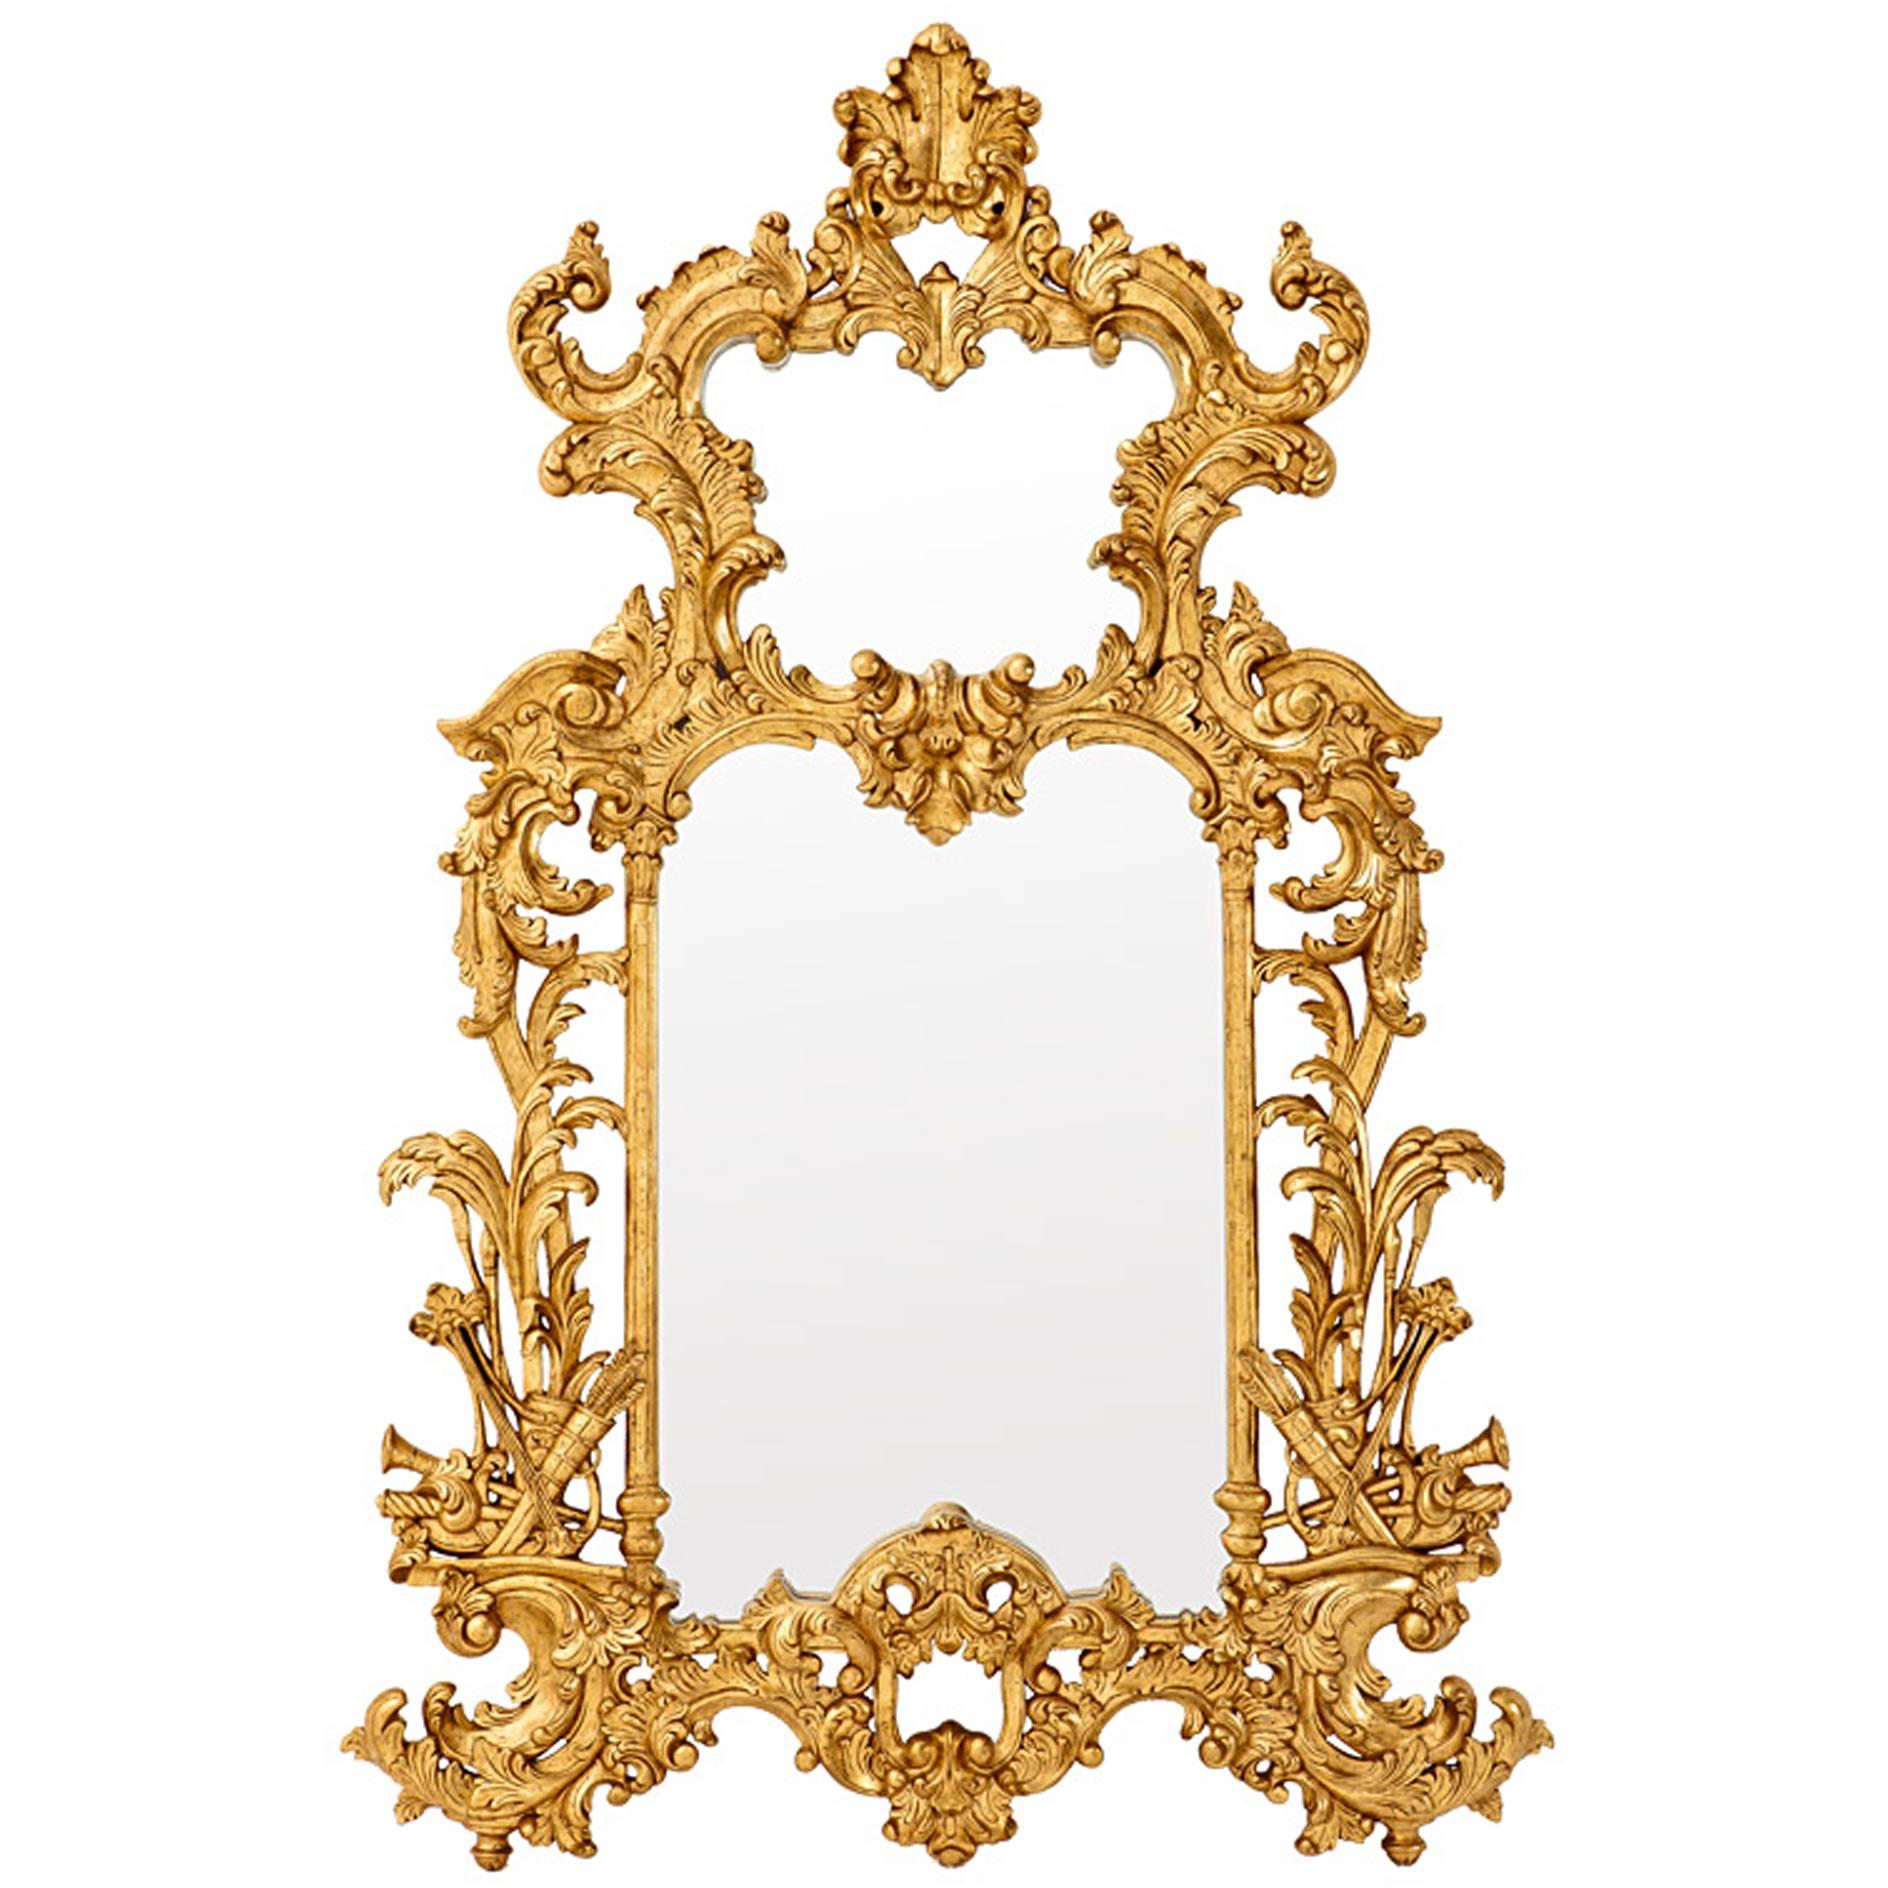 Bergman Mirror with gold leaf